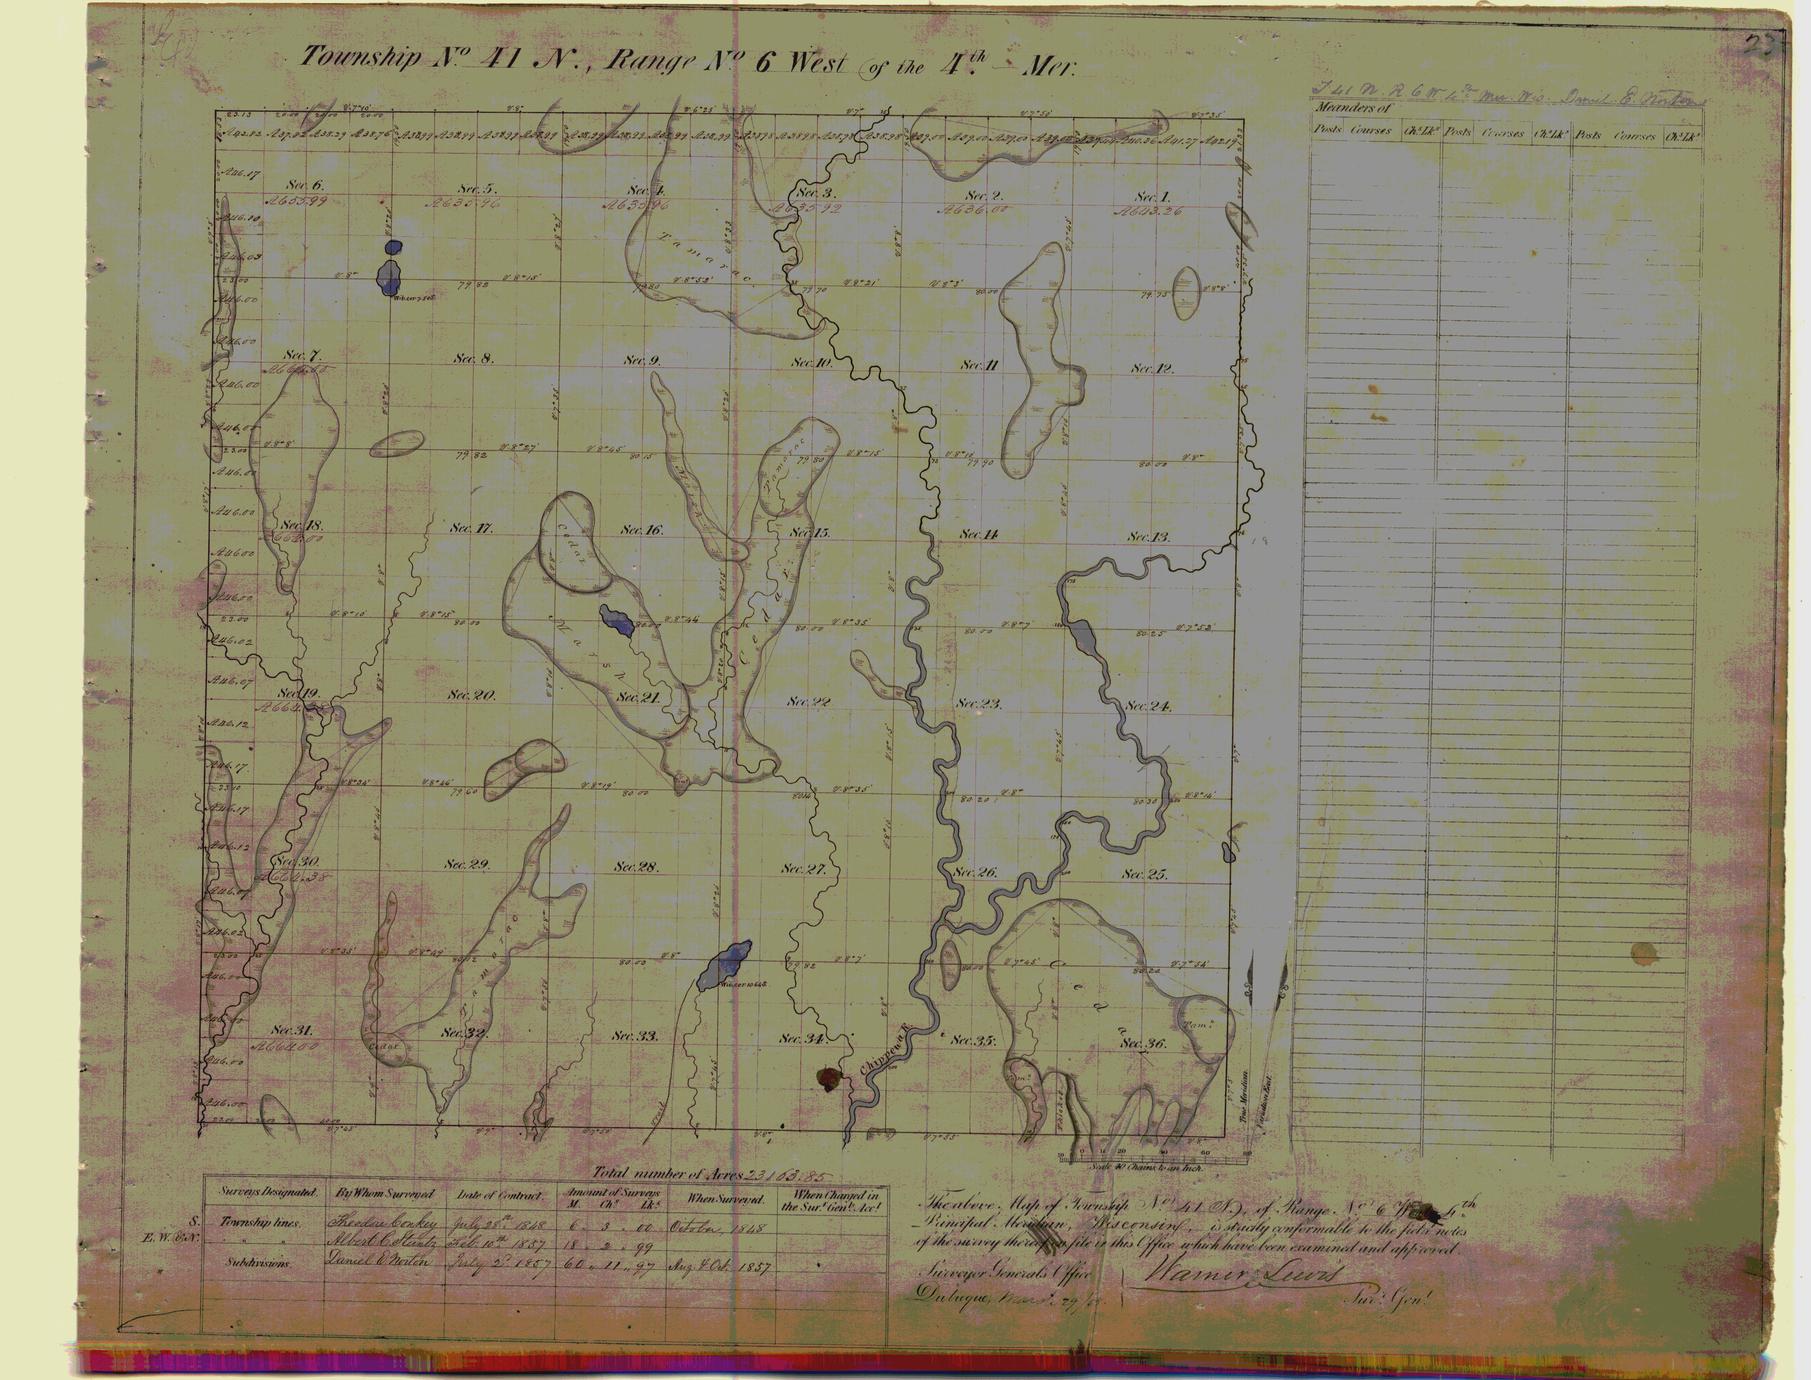 [Public Land Survey System map: Wisconsin Township 41 North, Range 06 West]